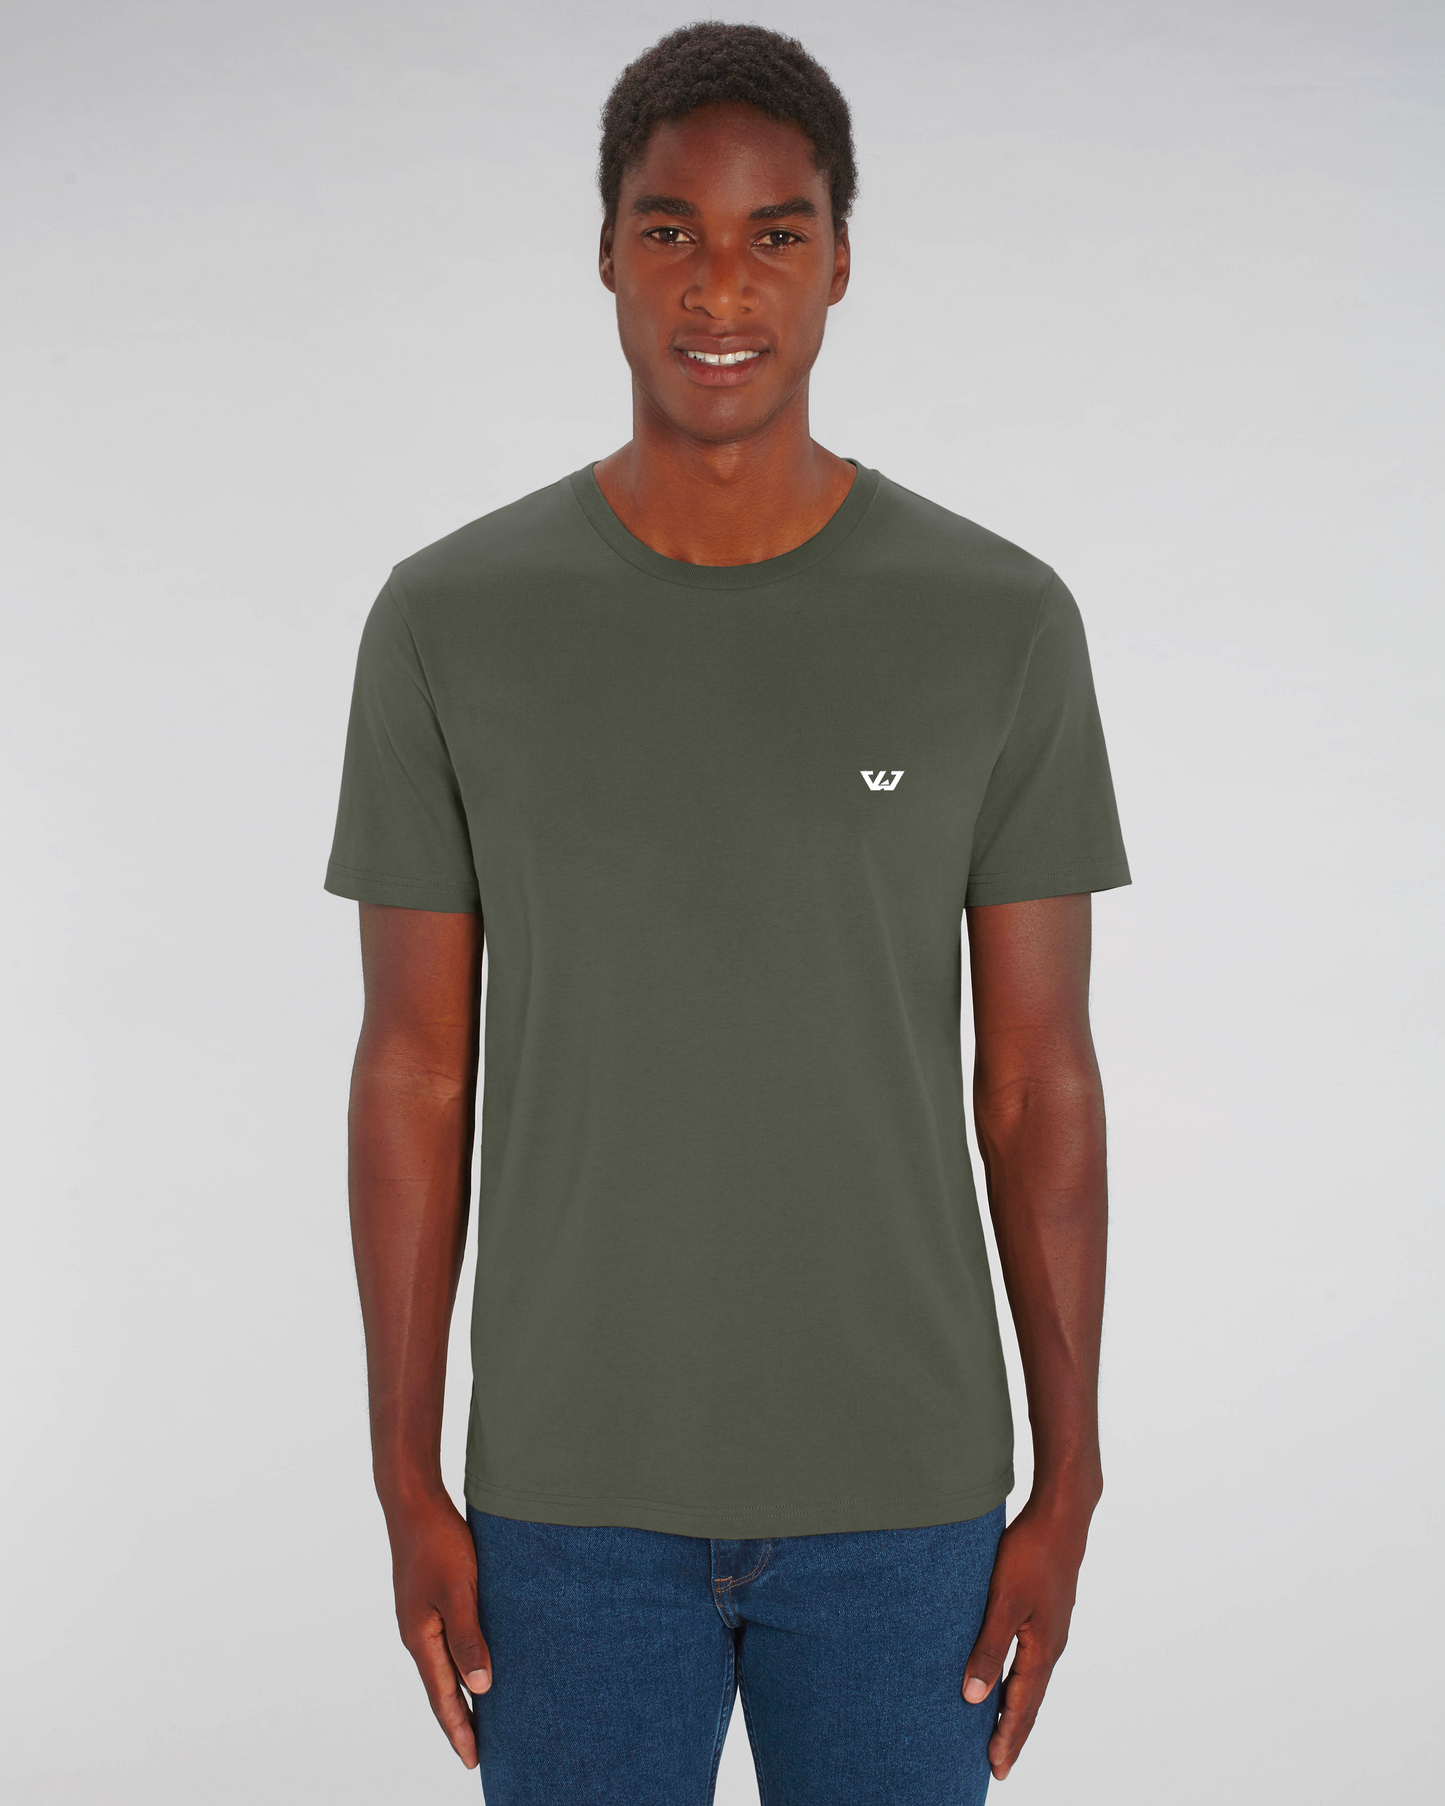 T-shirt bio Premium "R1250 GSA" Unisexe Dark alternative (+ de couleurs)